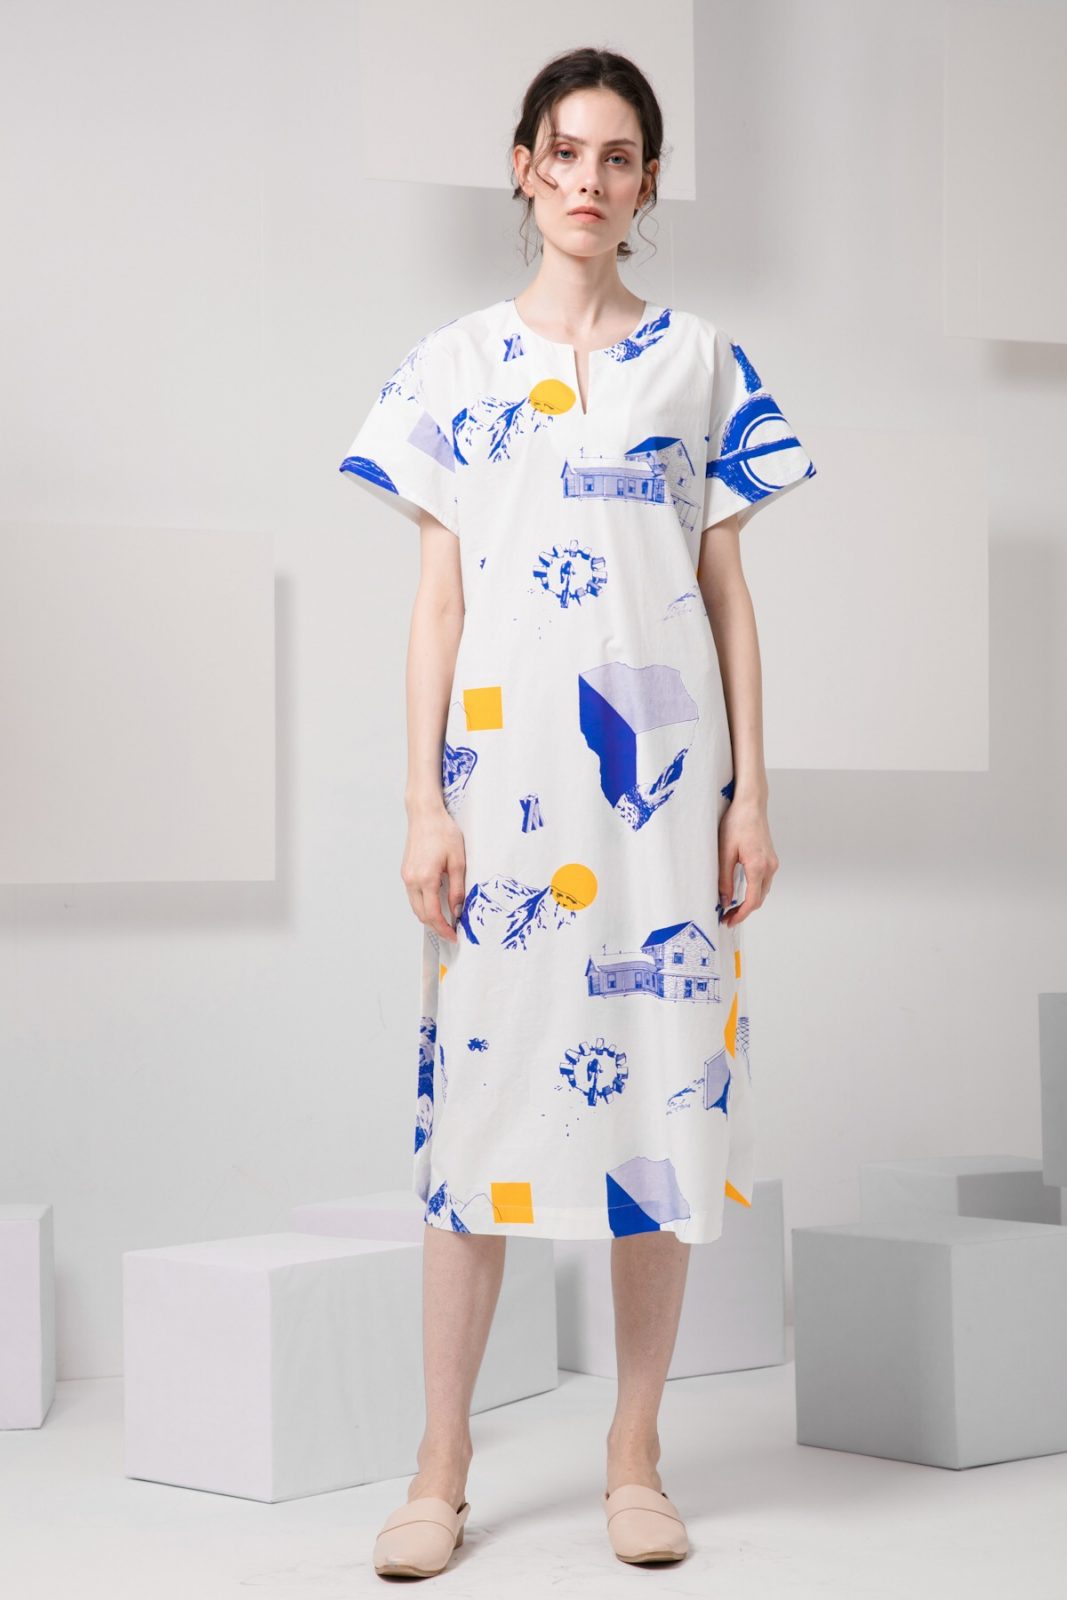 SKYE modern minimalist women clothing fashion Lois Dress interstellar 6